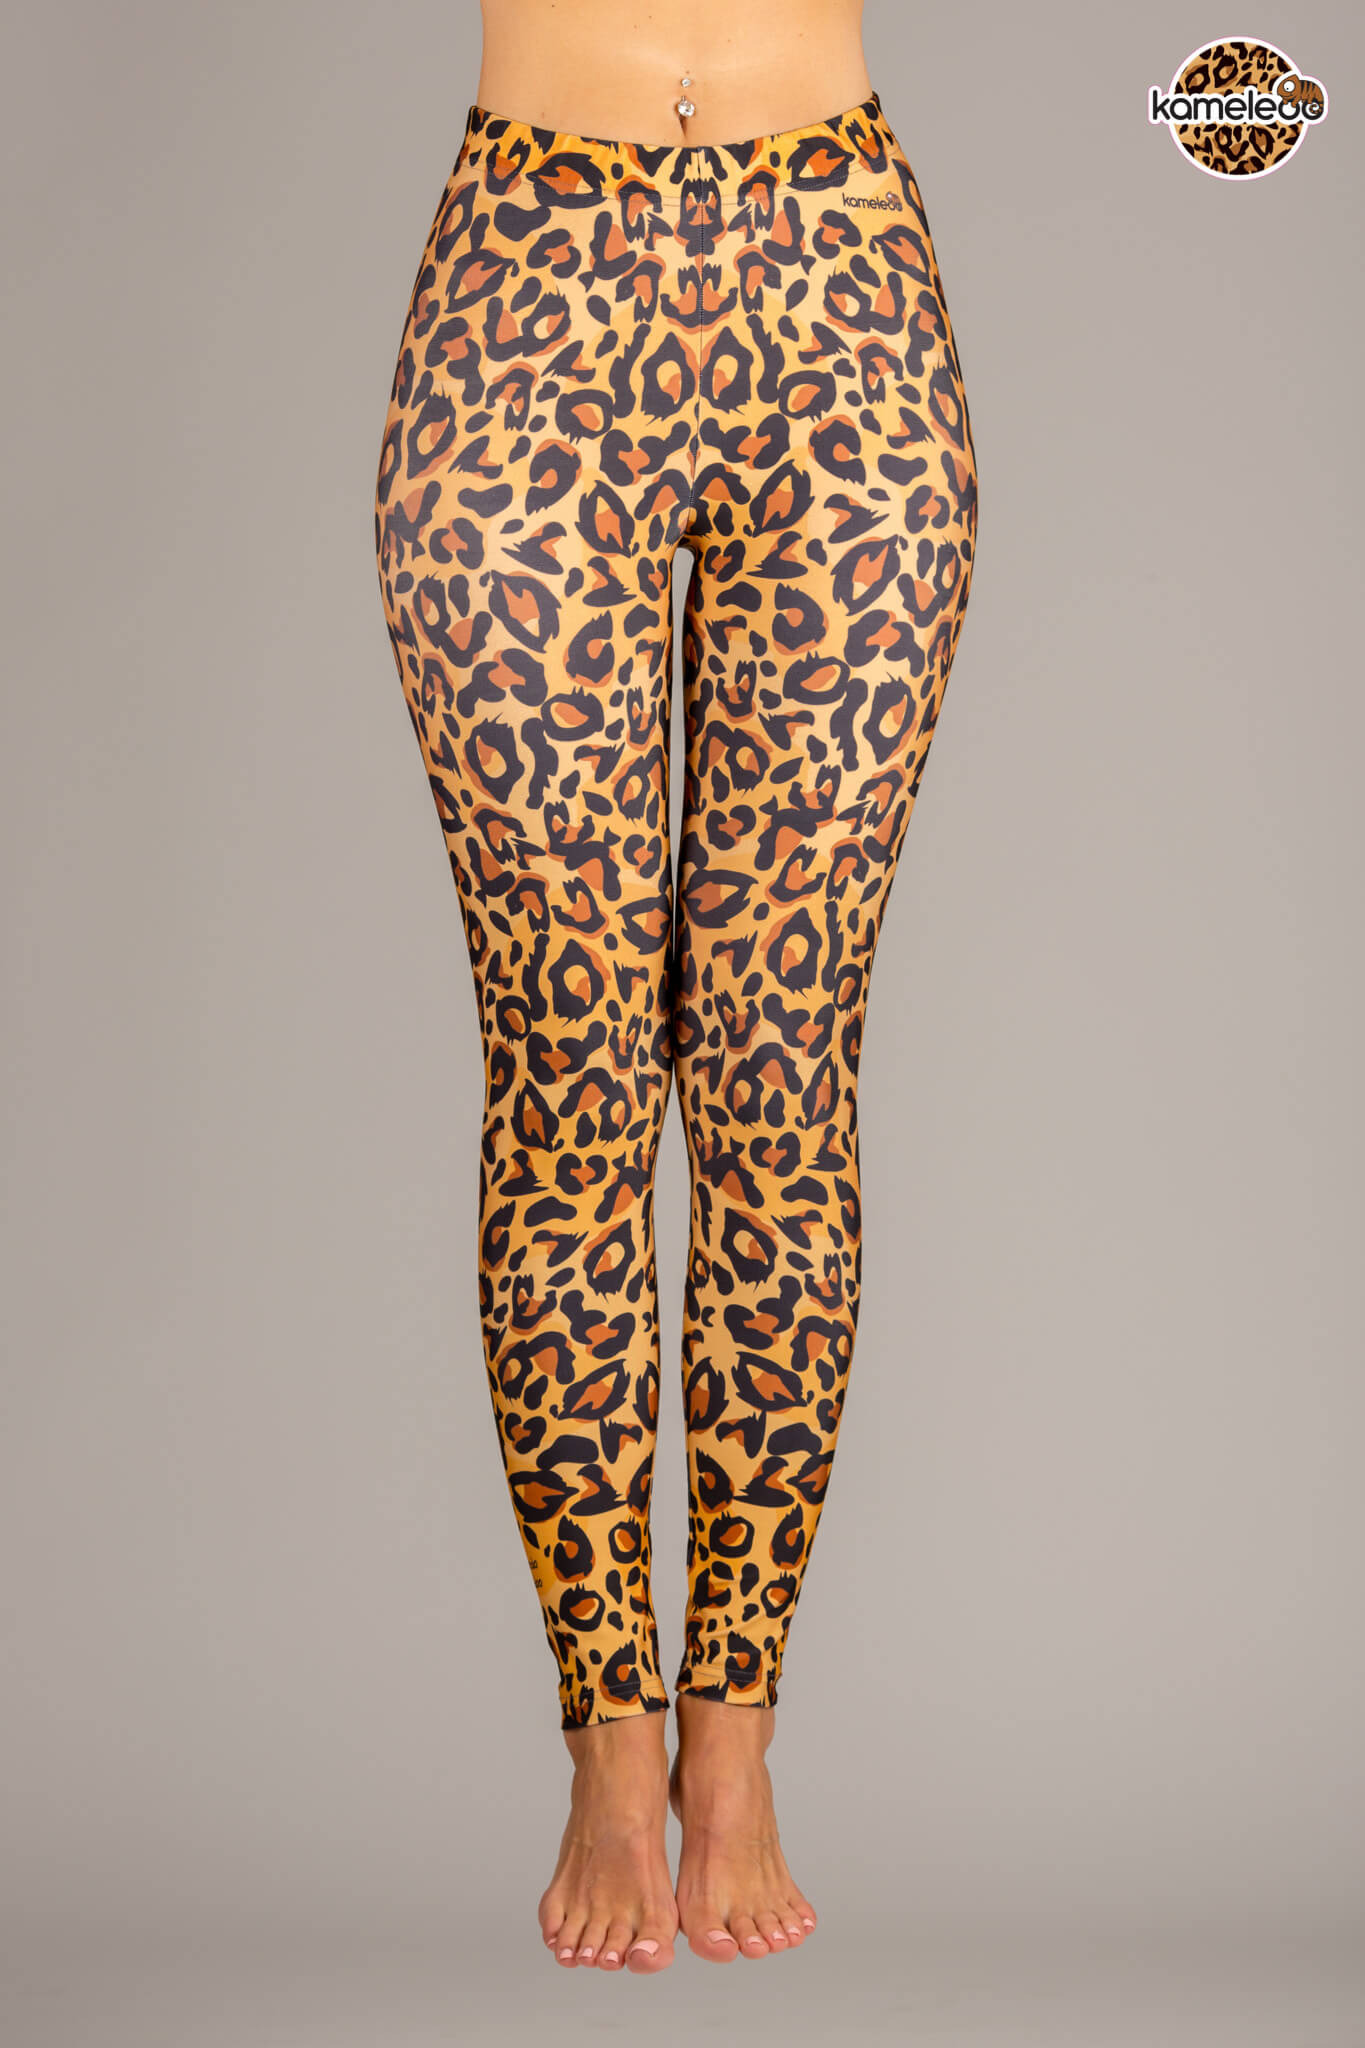 Leopardo Coloridoo Panther Leggings - Natural